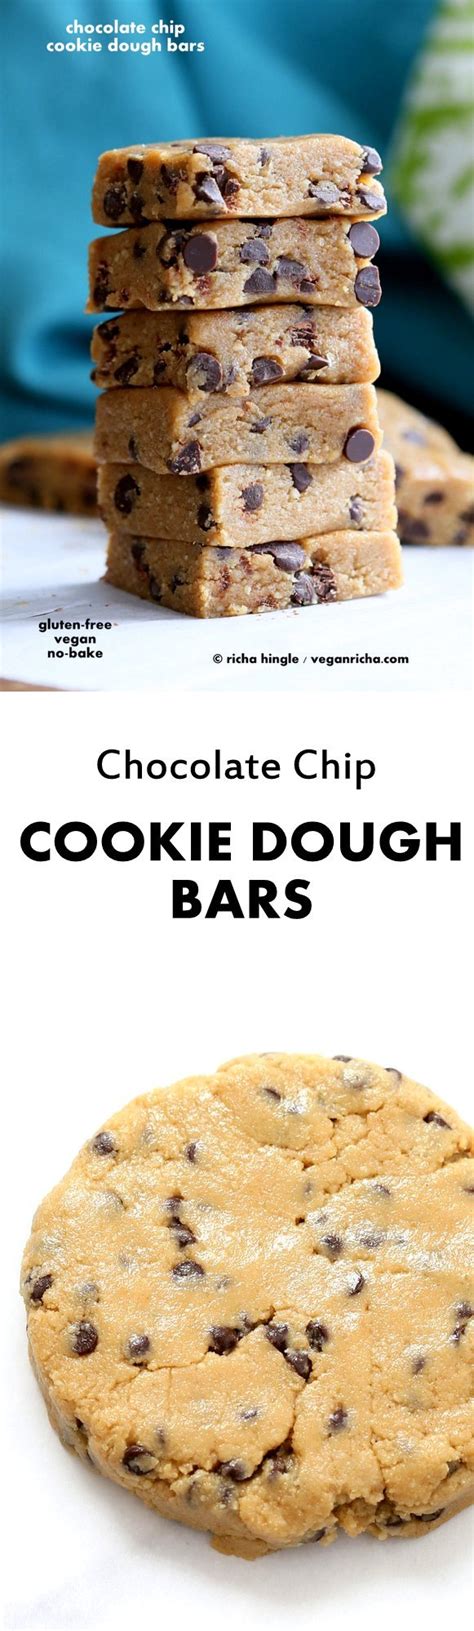 Vegan Chocolate Chip Cookie Dough Bars No Bake Glutenfree Vegan Richa